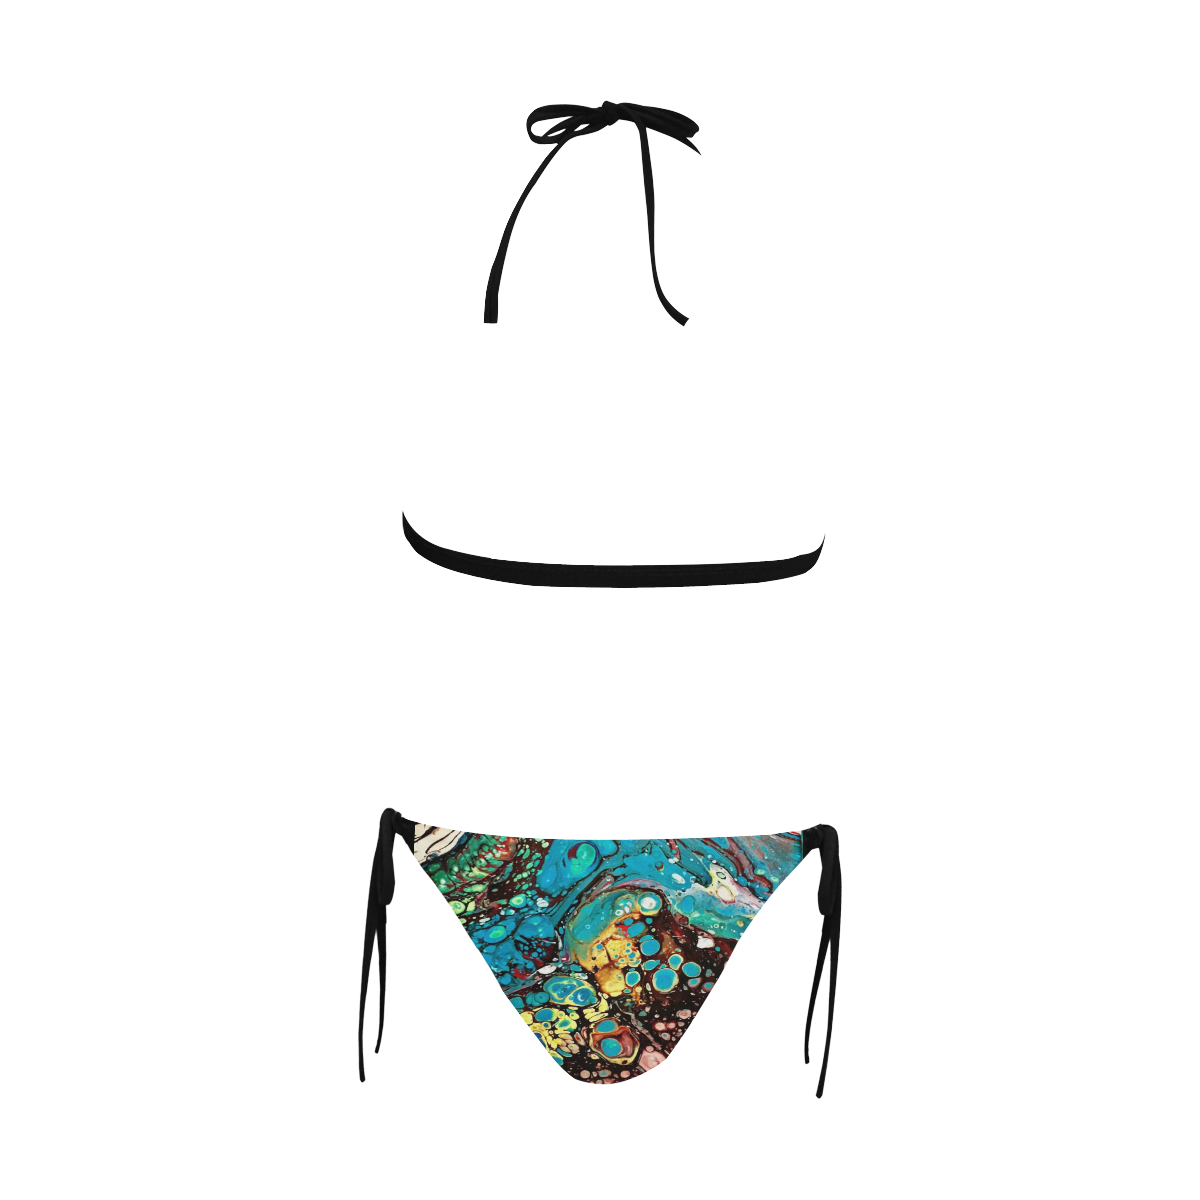 Coral Ocean bathing suit Buckle Front Halter Bikini Swimsuit (Model S08)